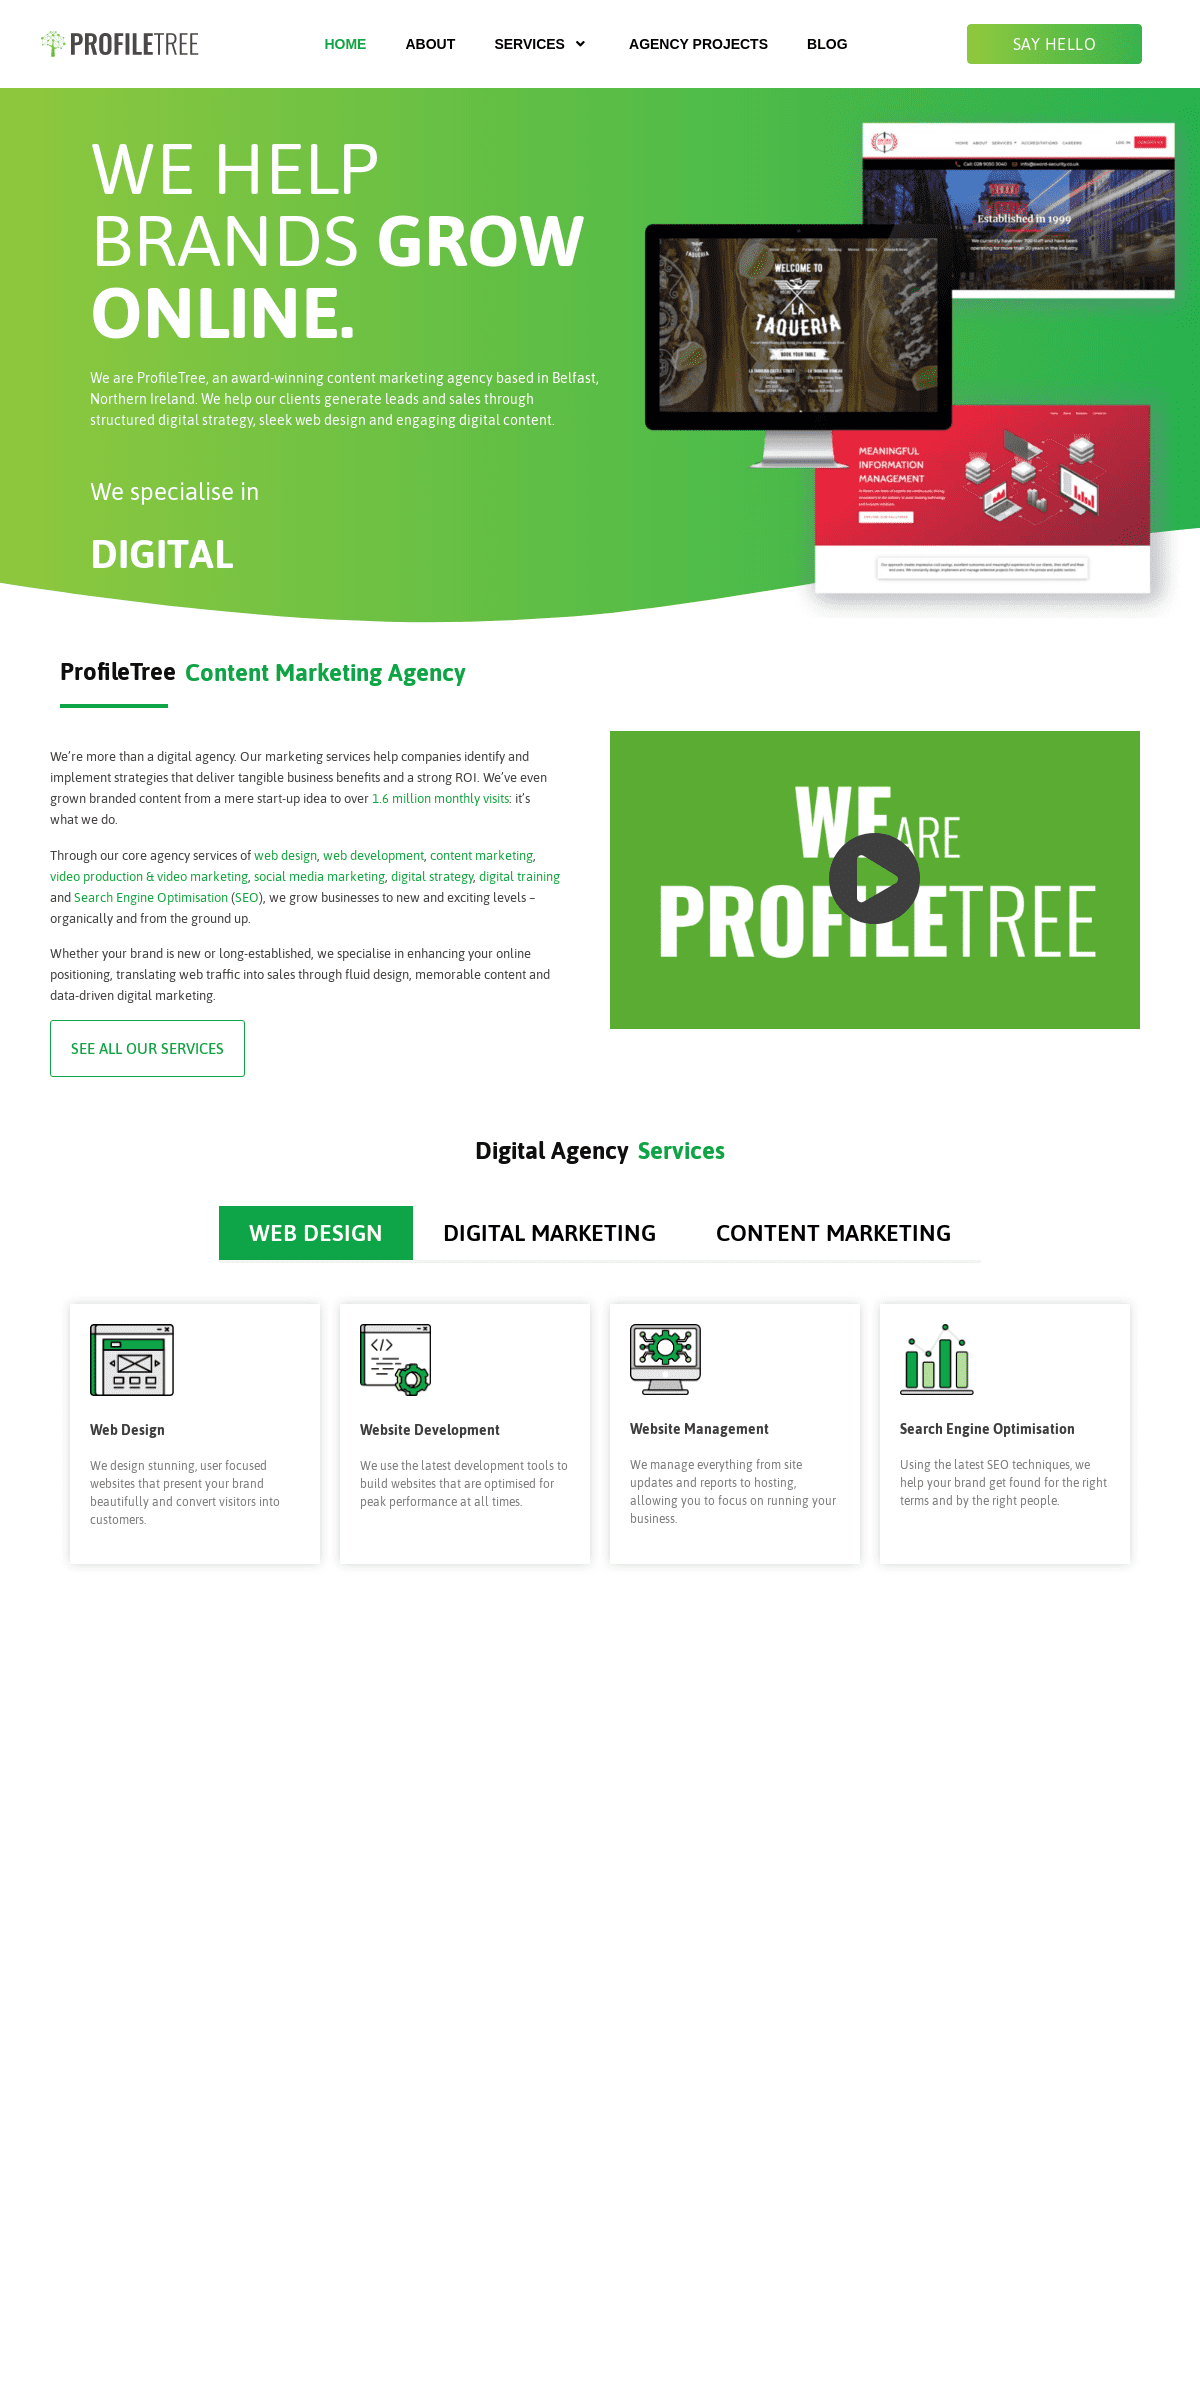 A complete backup of profiletree.com